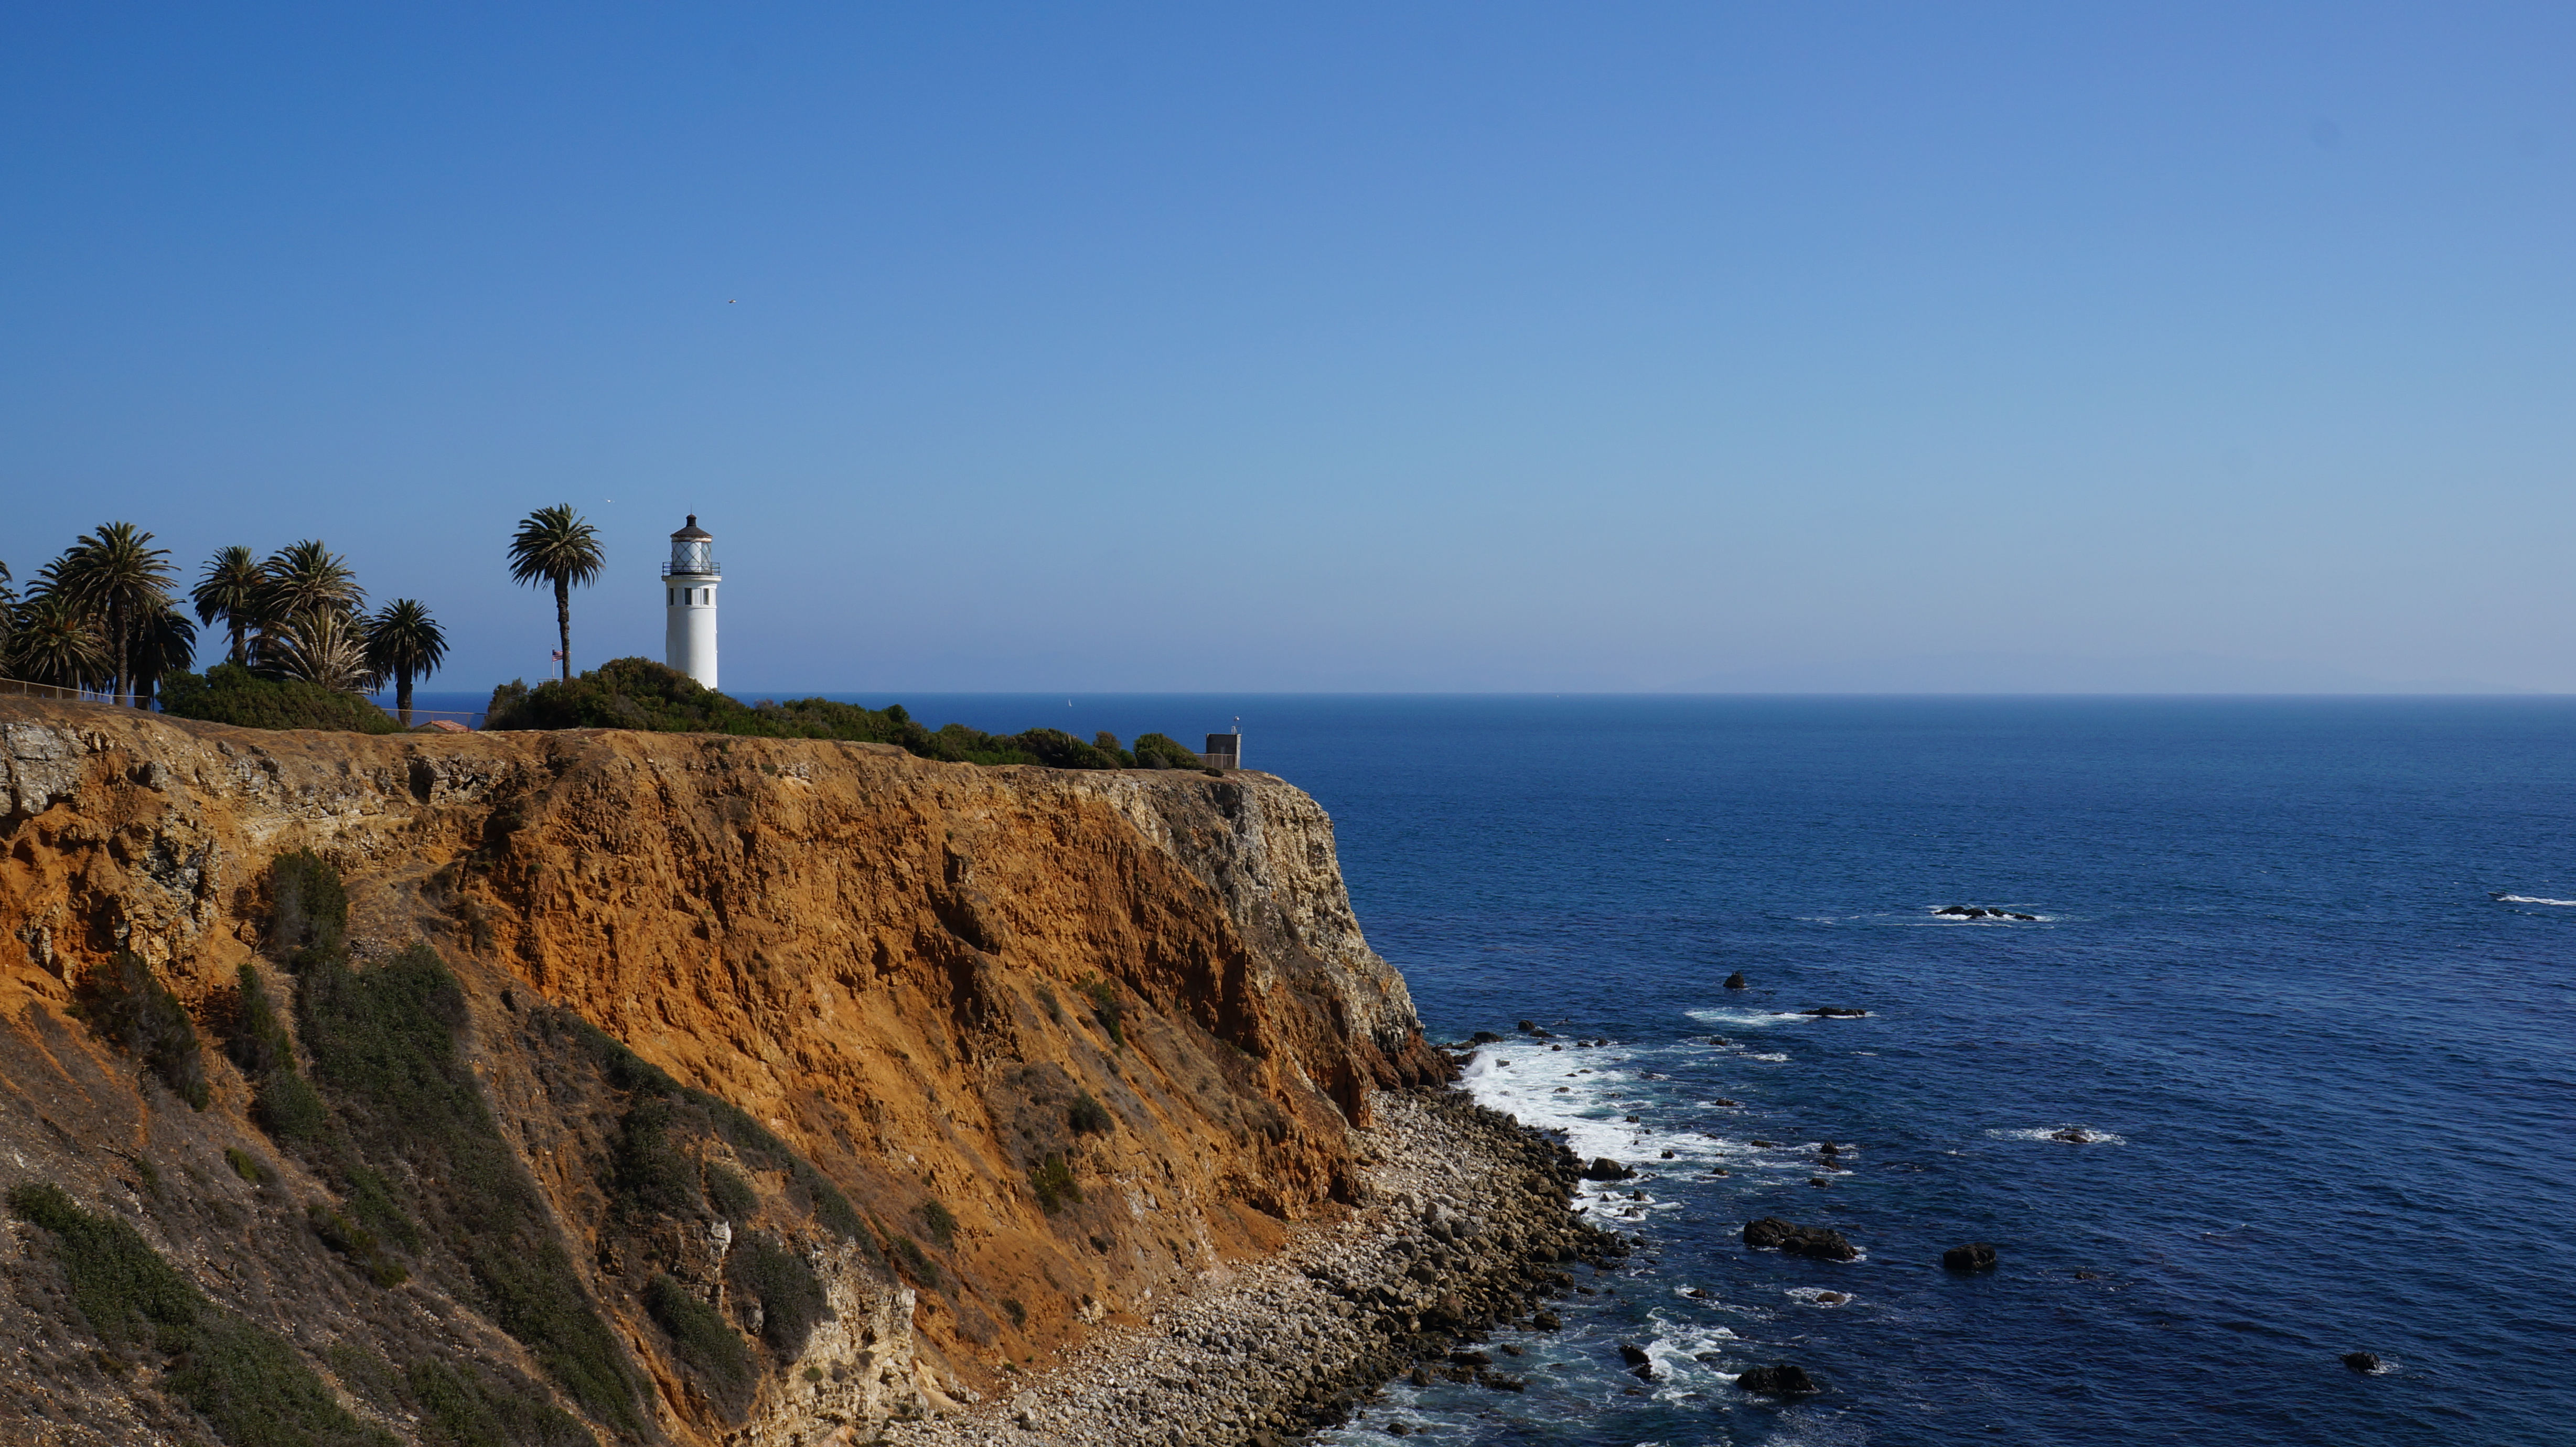 Lighthouse and sea photo